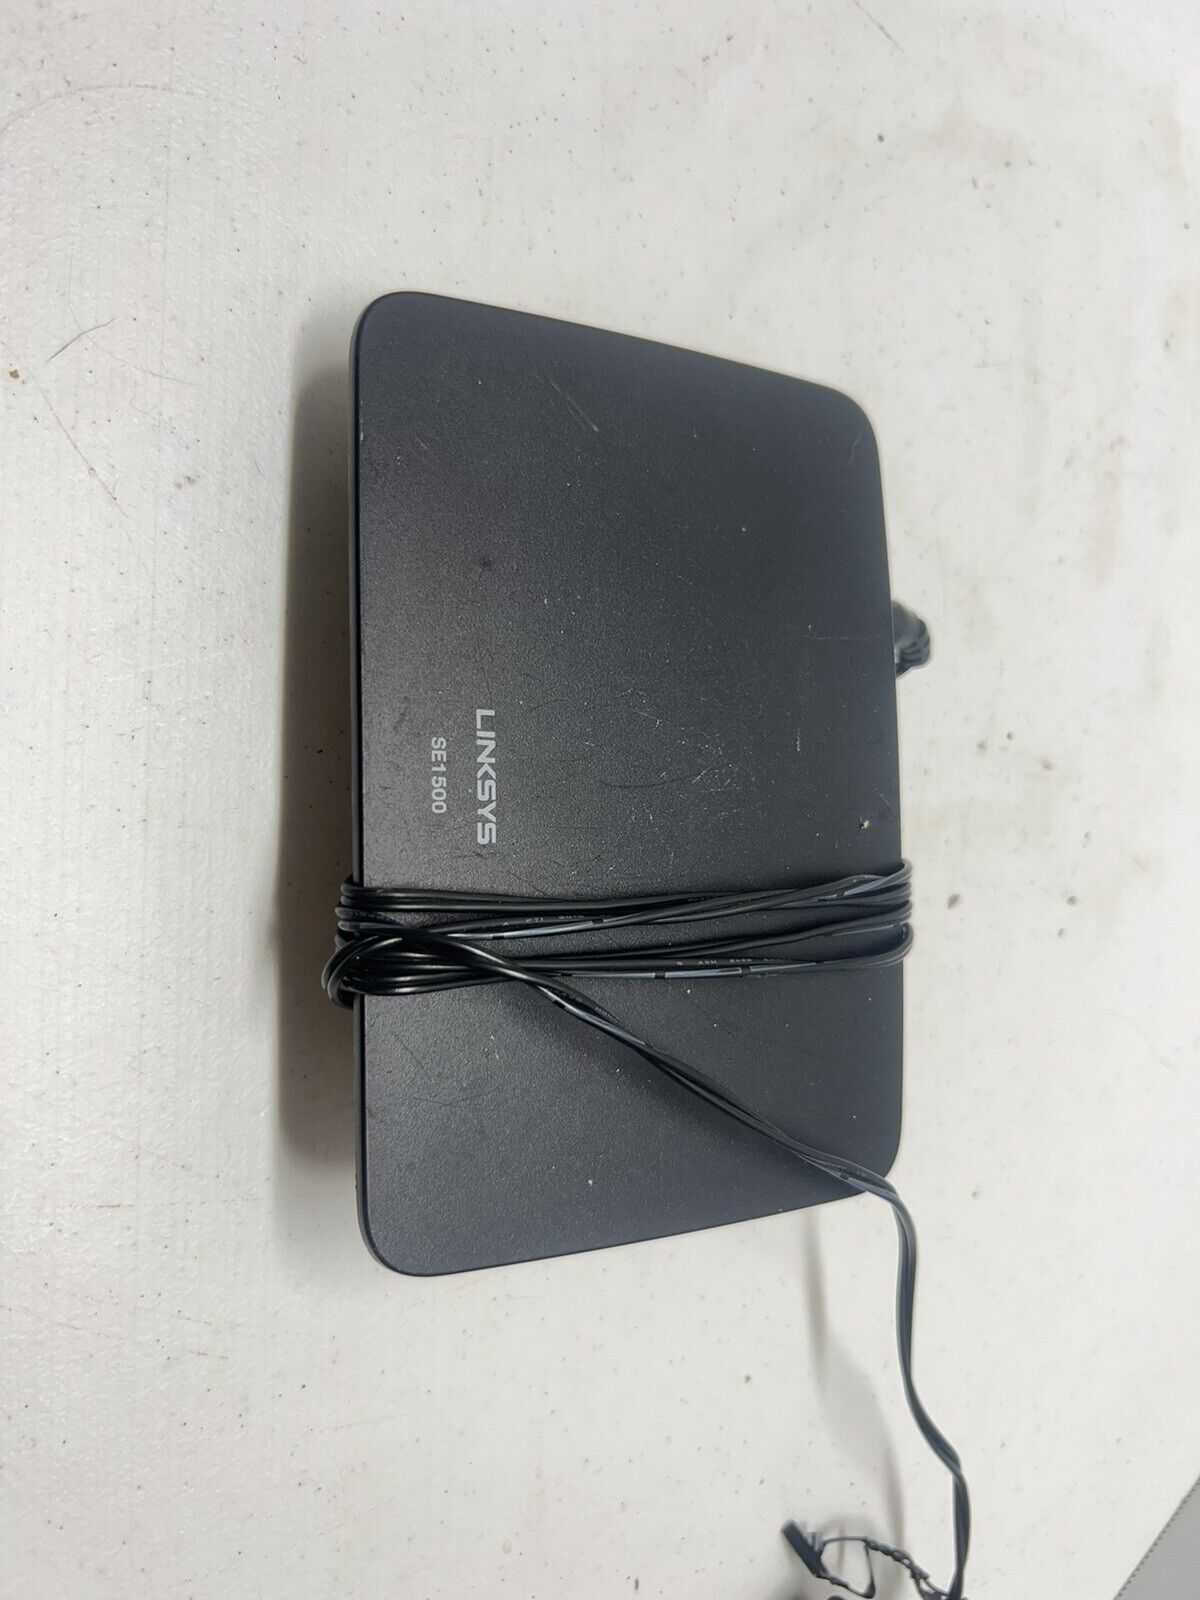 CISCO Linksys 5 Port Fast Ethernet Switch - Linksys SE1500 w/power adapter